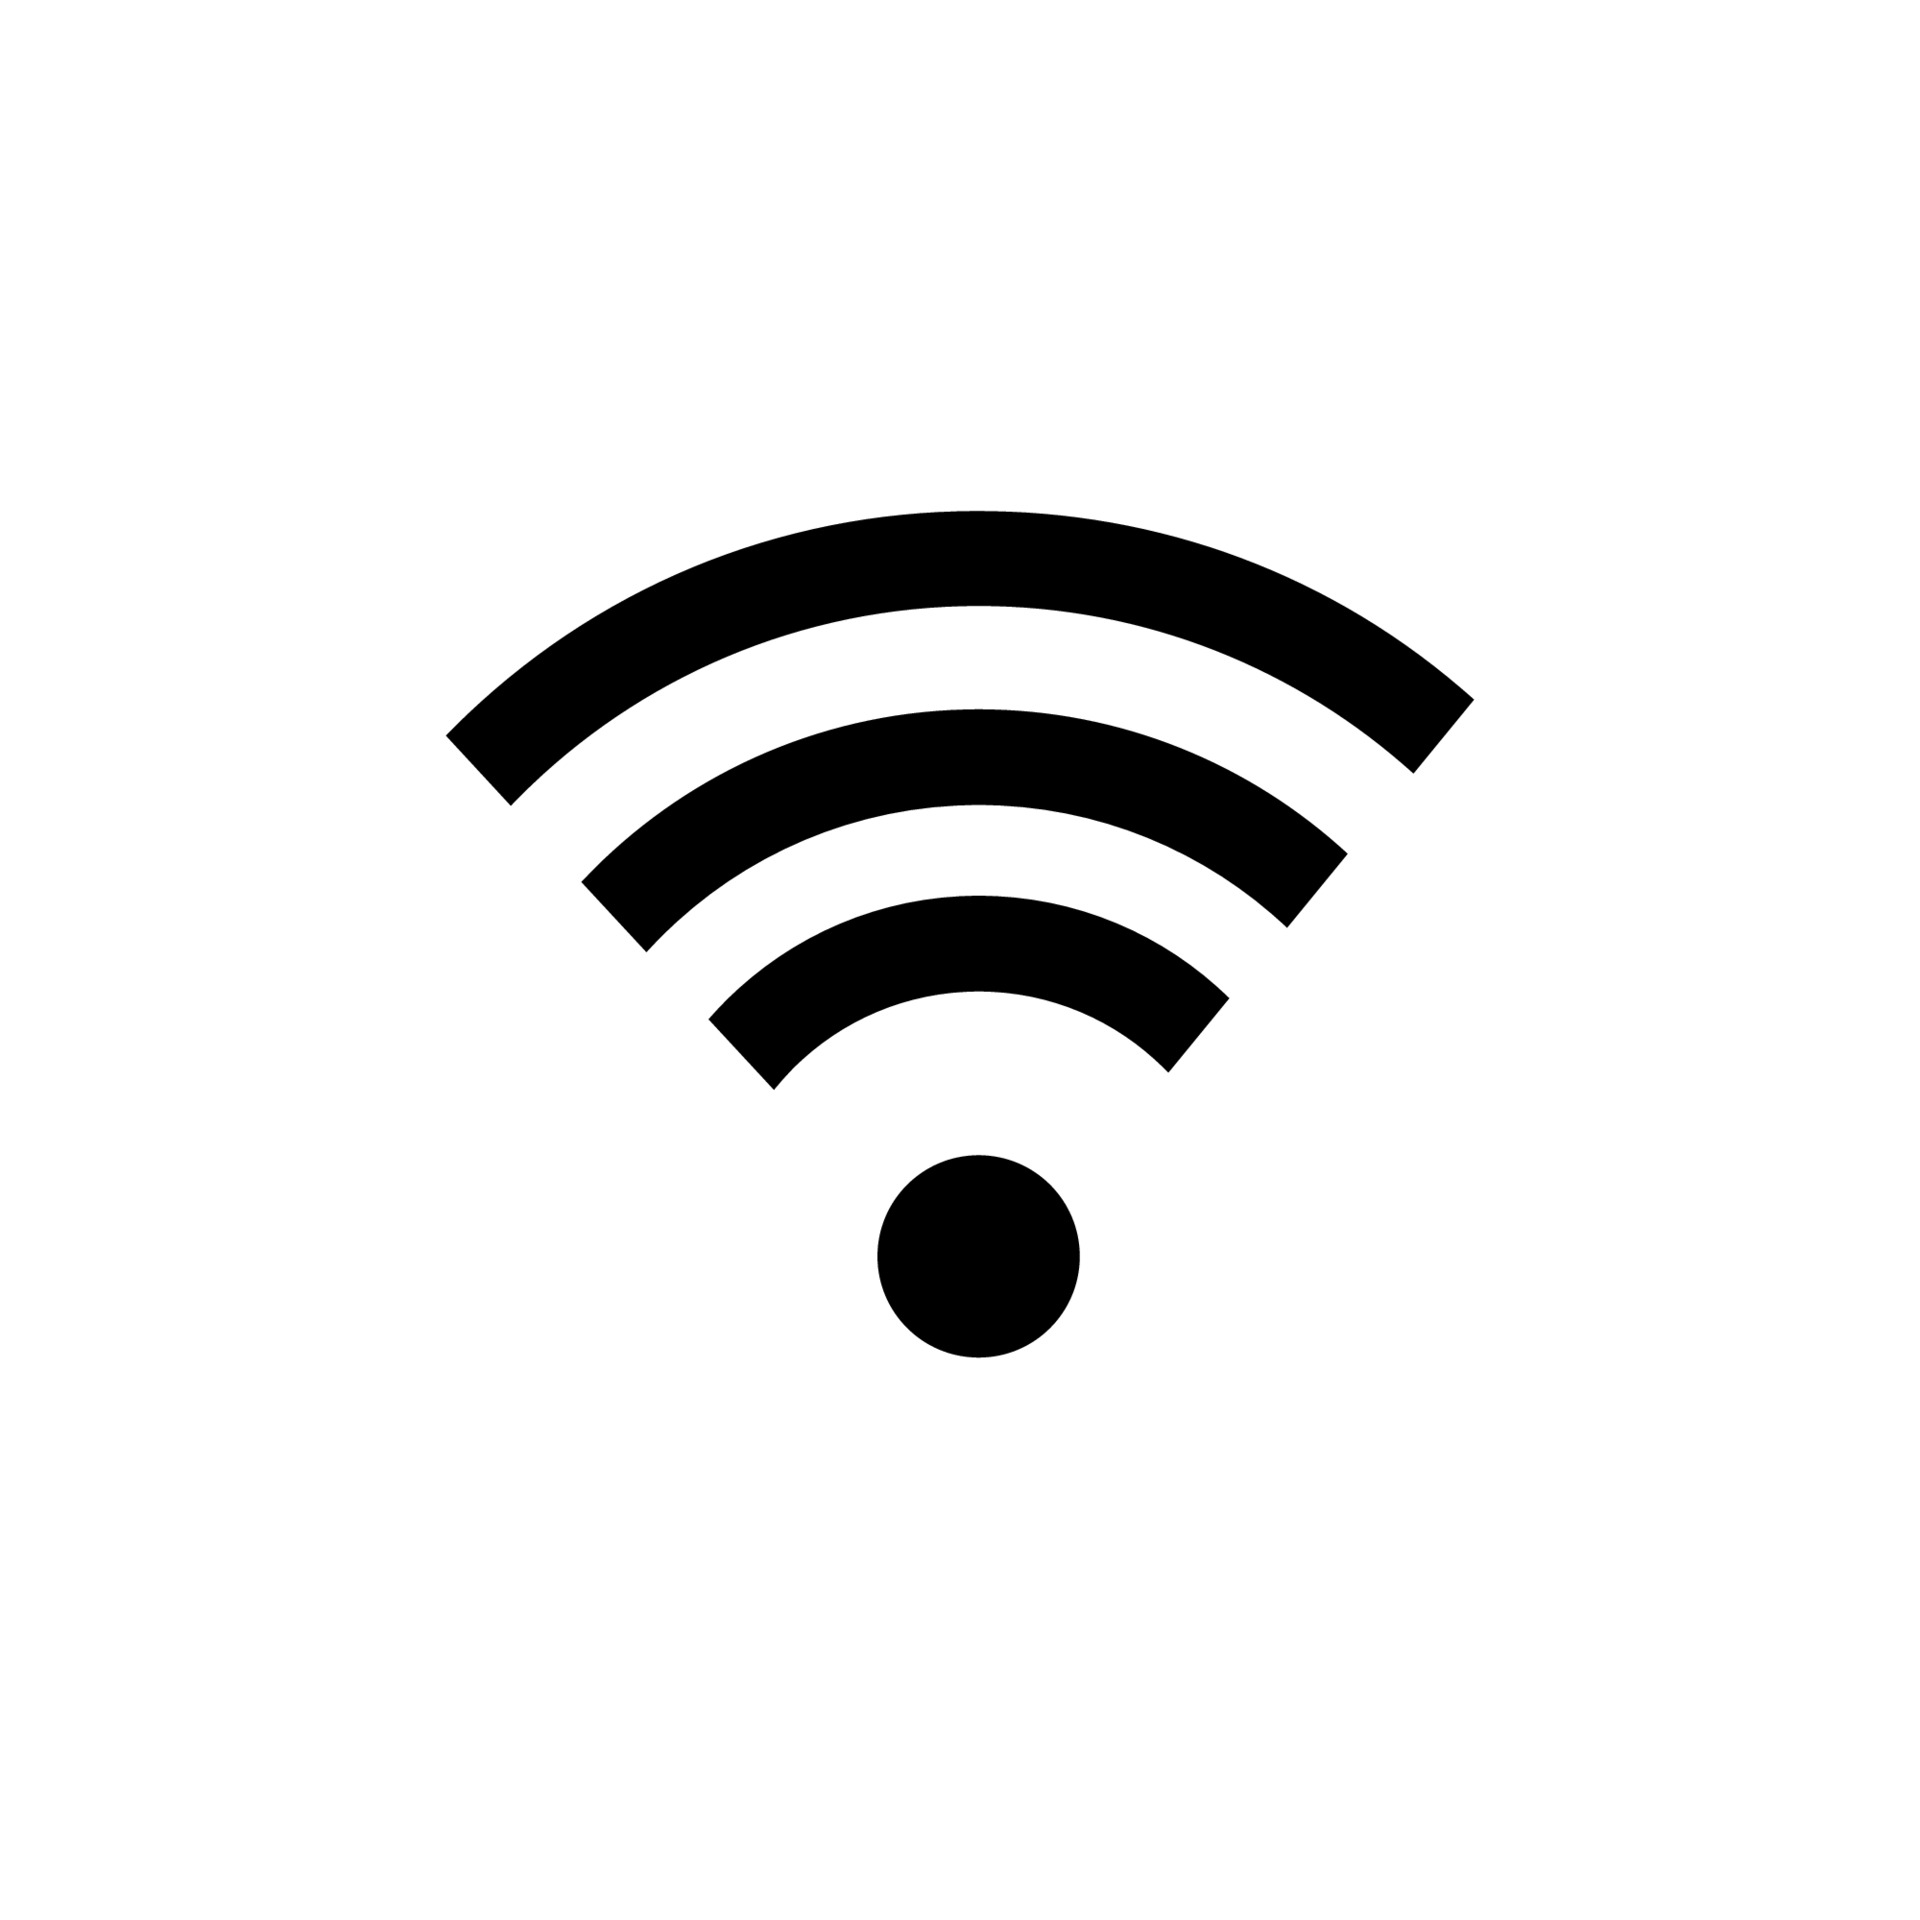 Wifi vector